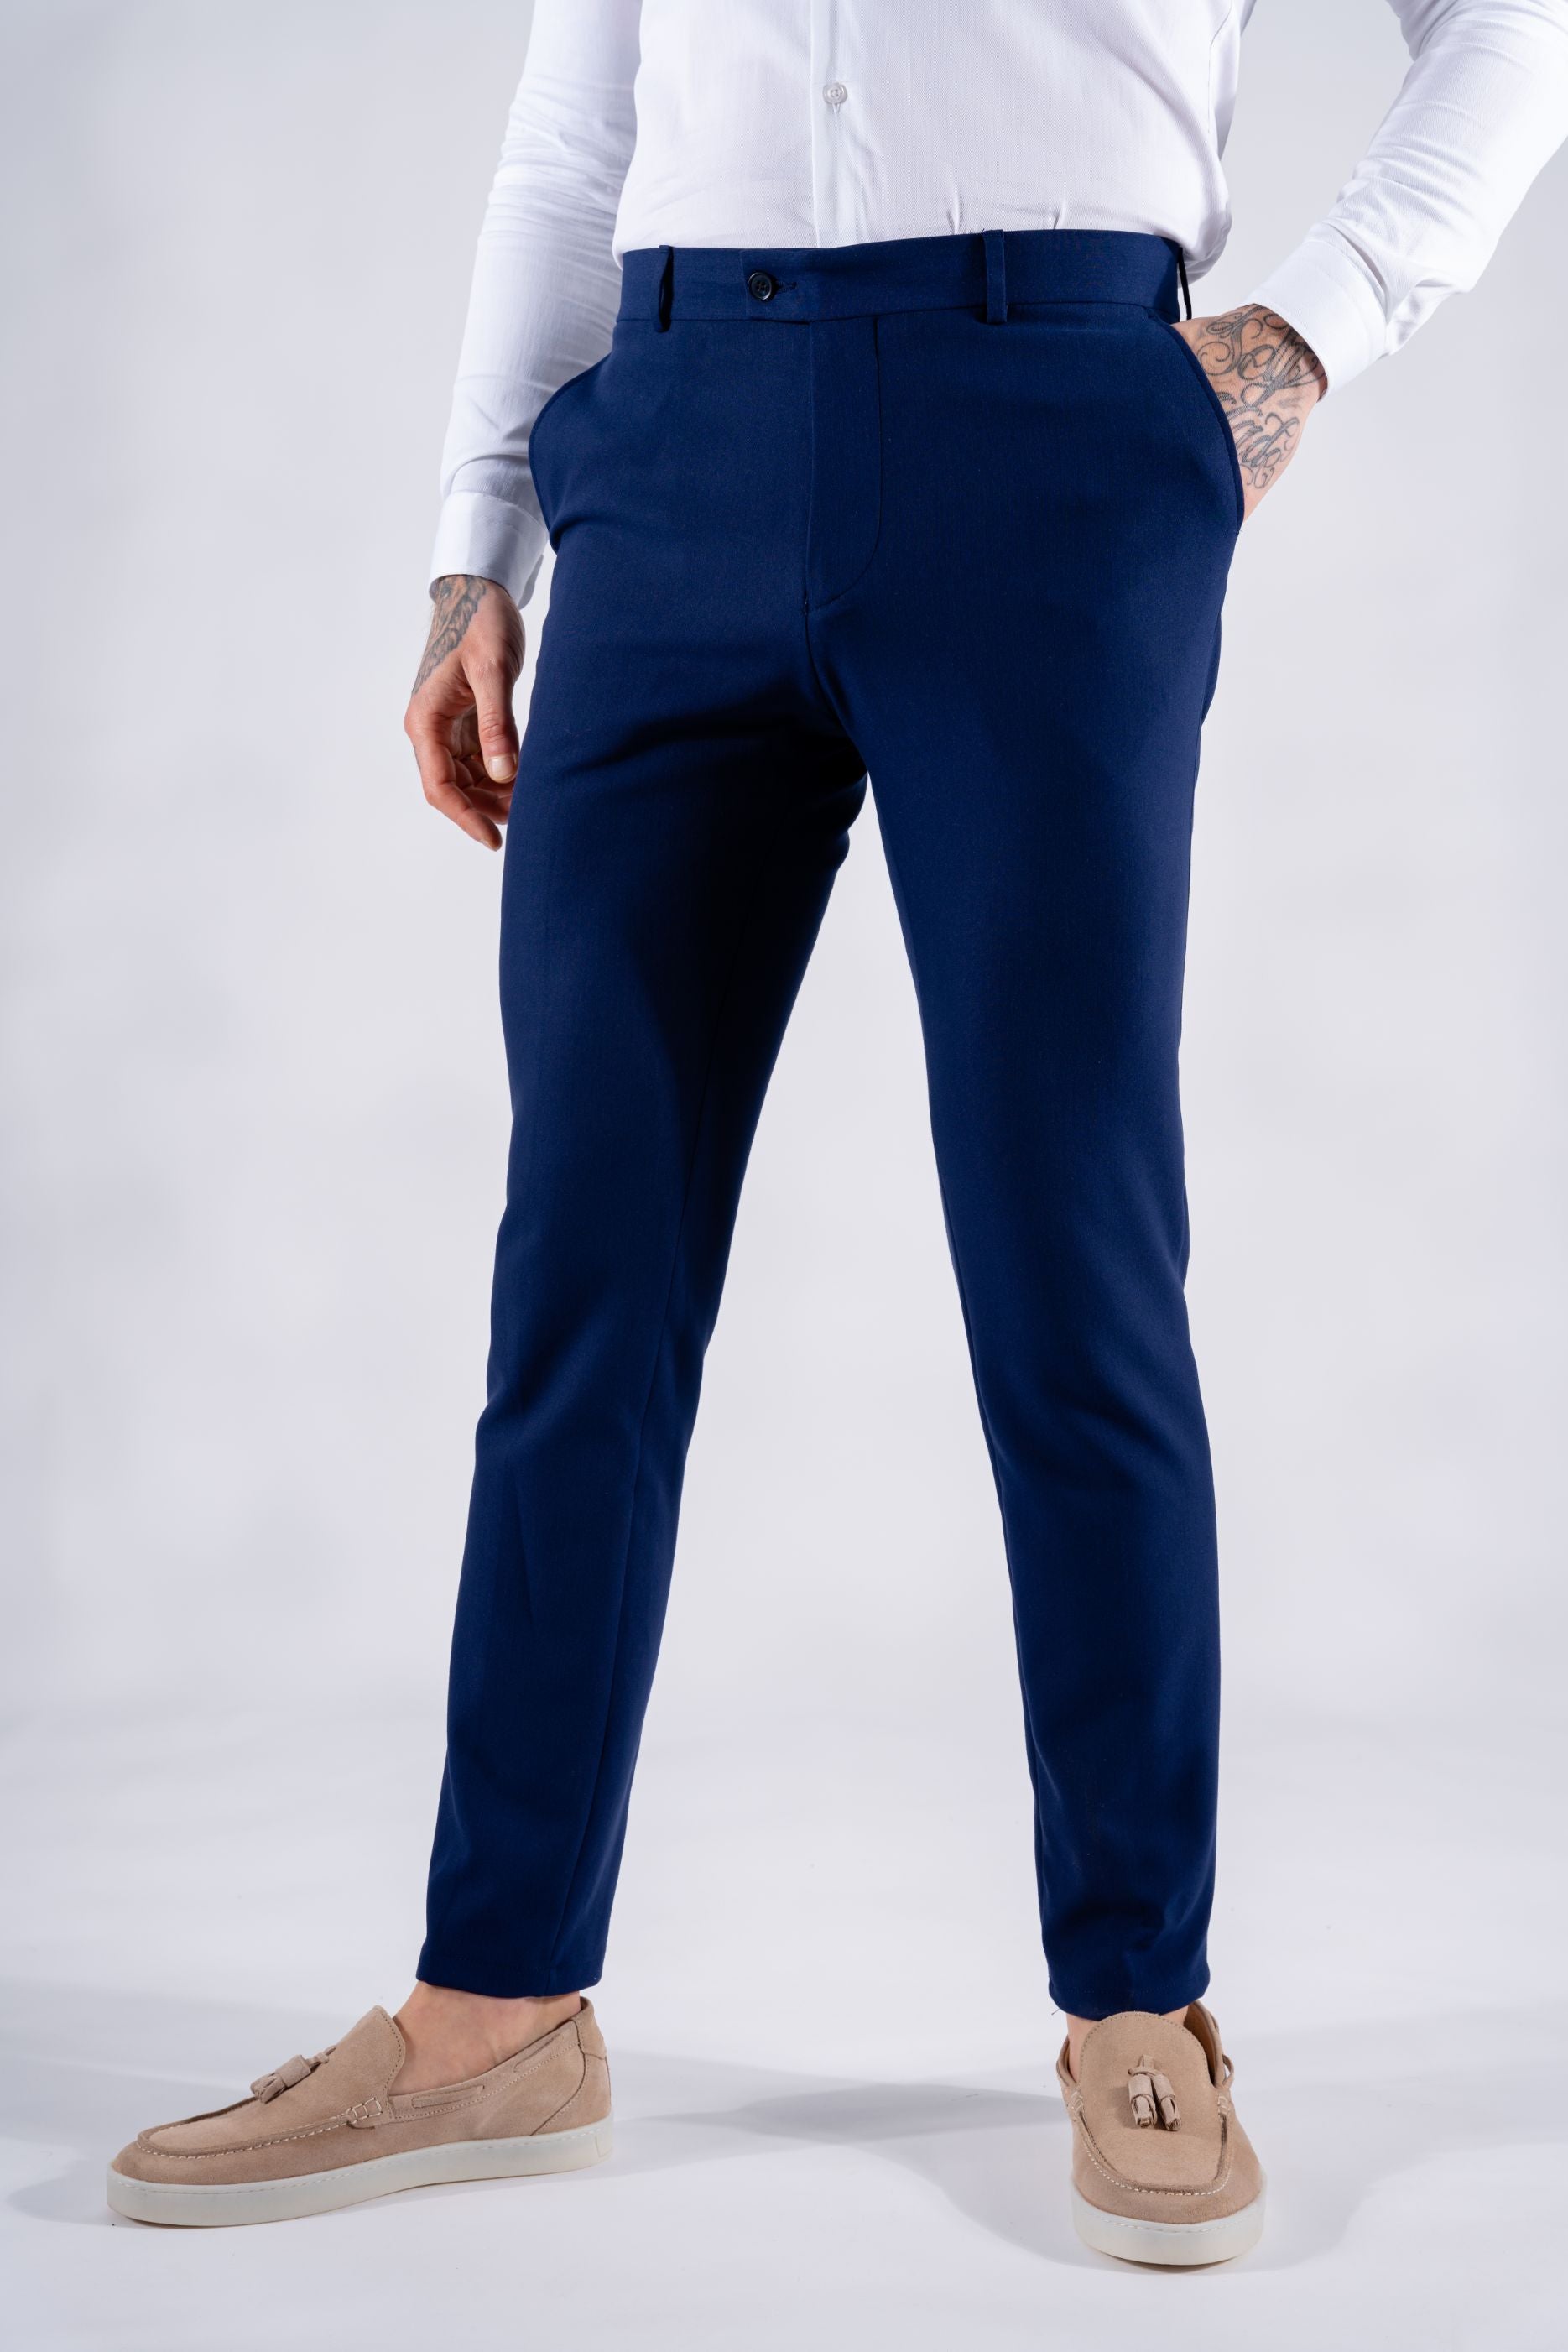 pantalon Chic slim fit donker blauw